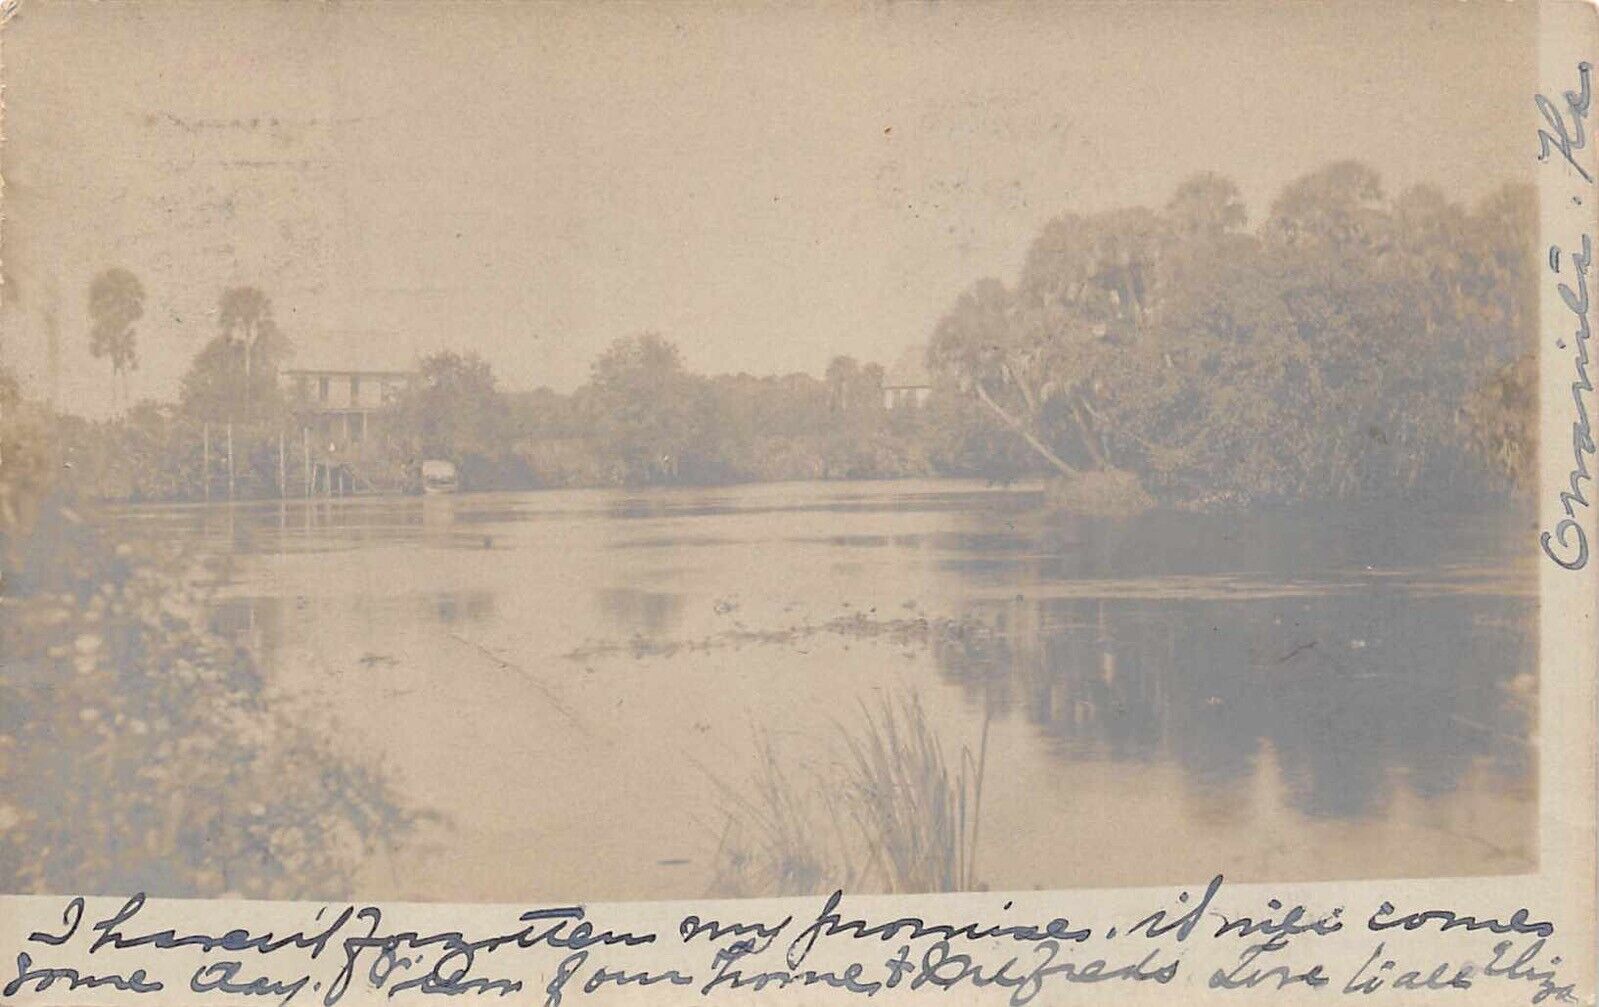 FL 1906 RARE FLORIDA Caloosahatchee River at Owanita, FLA - Alva - Lee County 